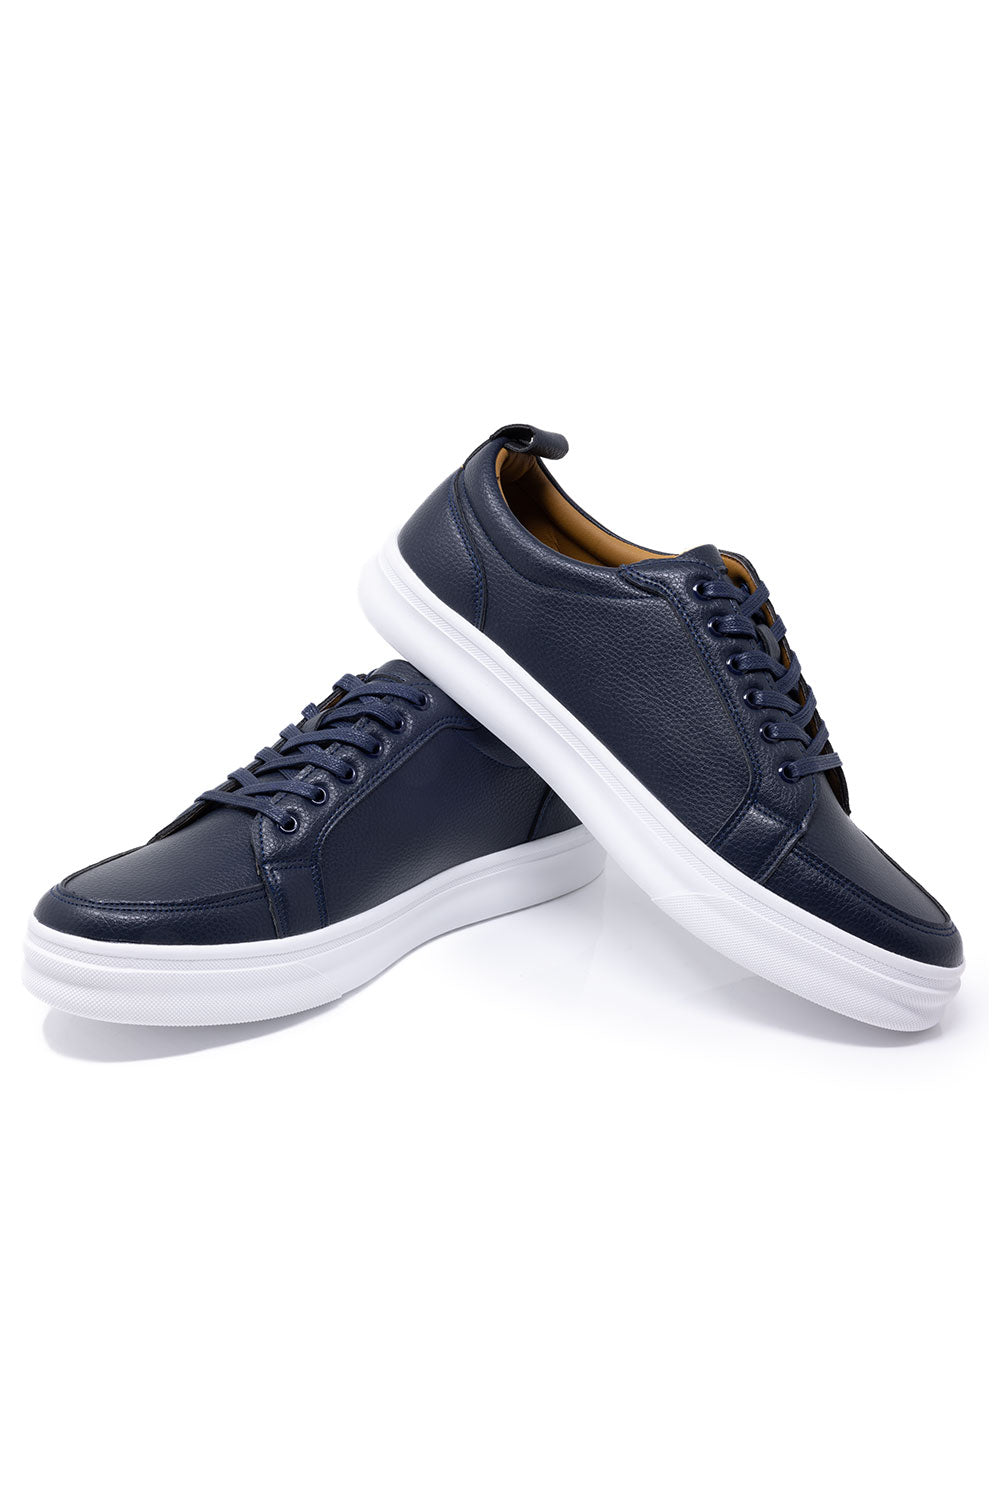 Barabas Men's premium low cut comfortable all-day sneakers 4SK05 Navy